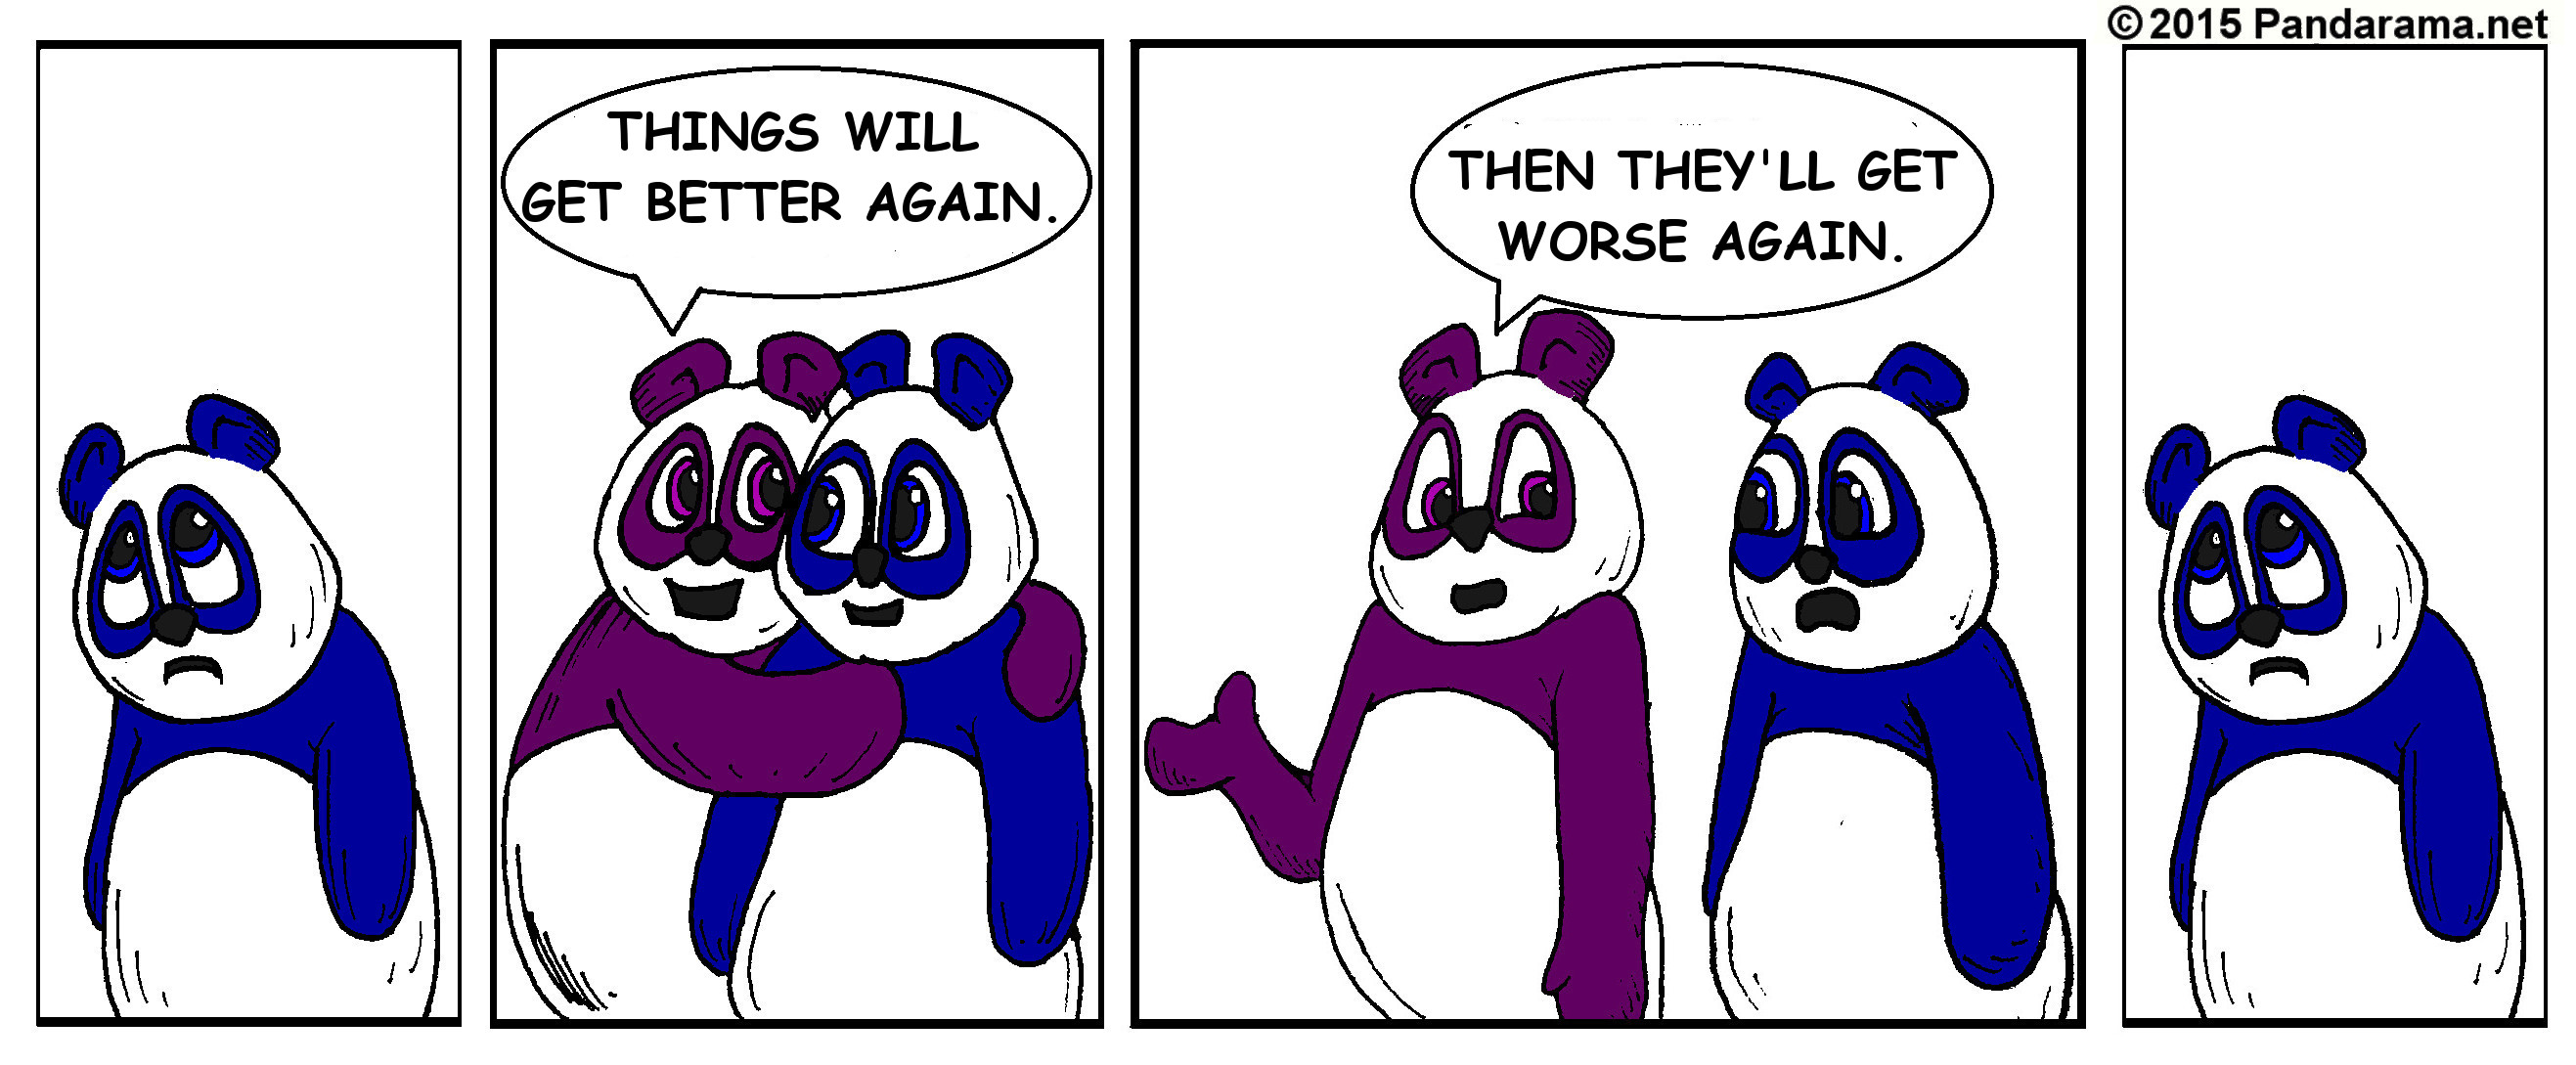 Pandarama cartoon of sad panda, 'things will get better again', momentary relief, 'then they'll get worse again', shows original sad panda.